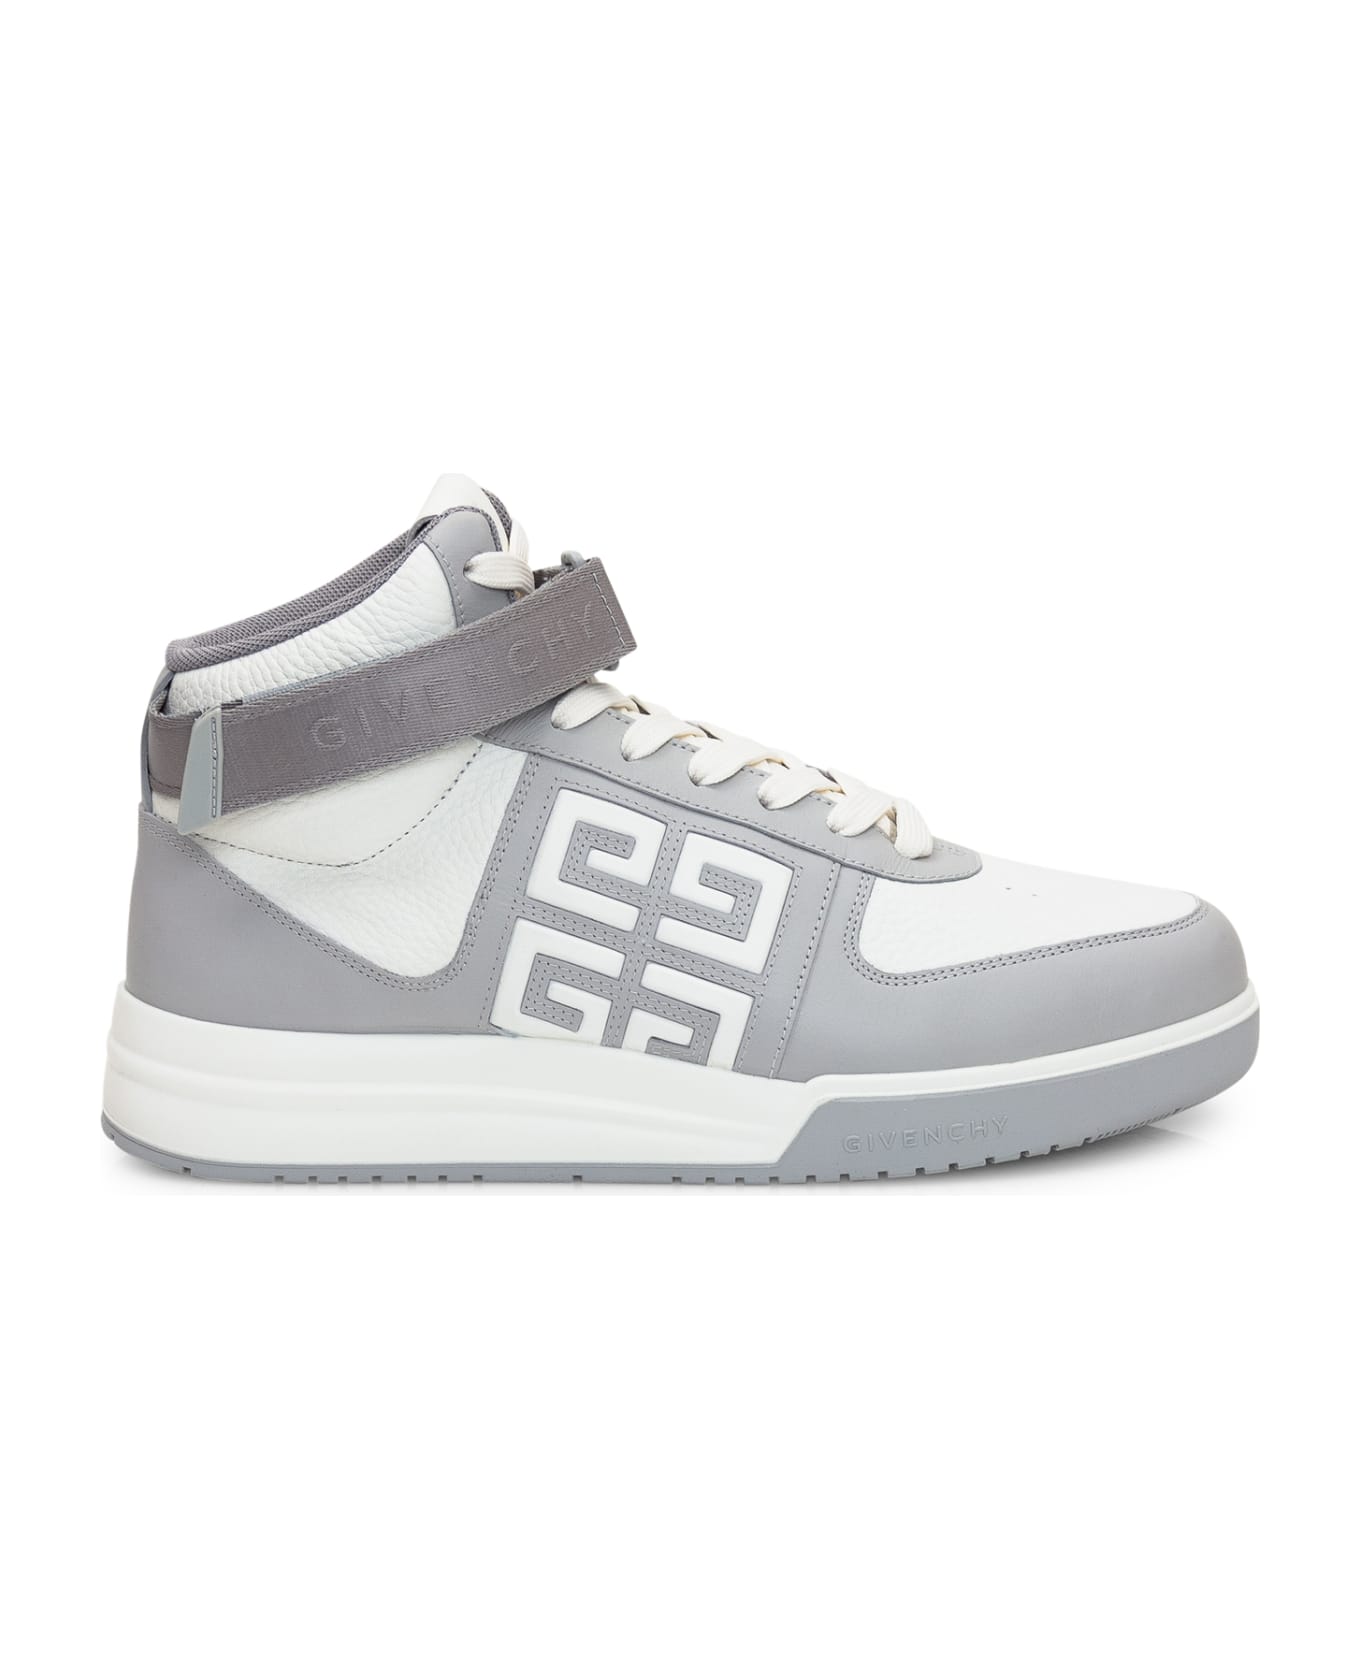 Givenchy G4 High Sneaker - Grey スニーカー